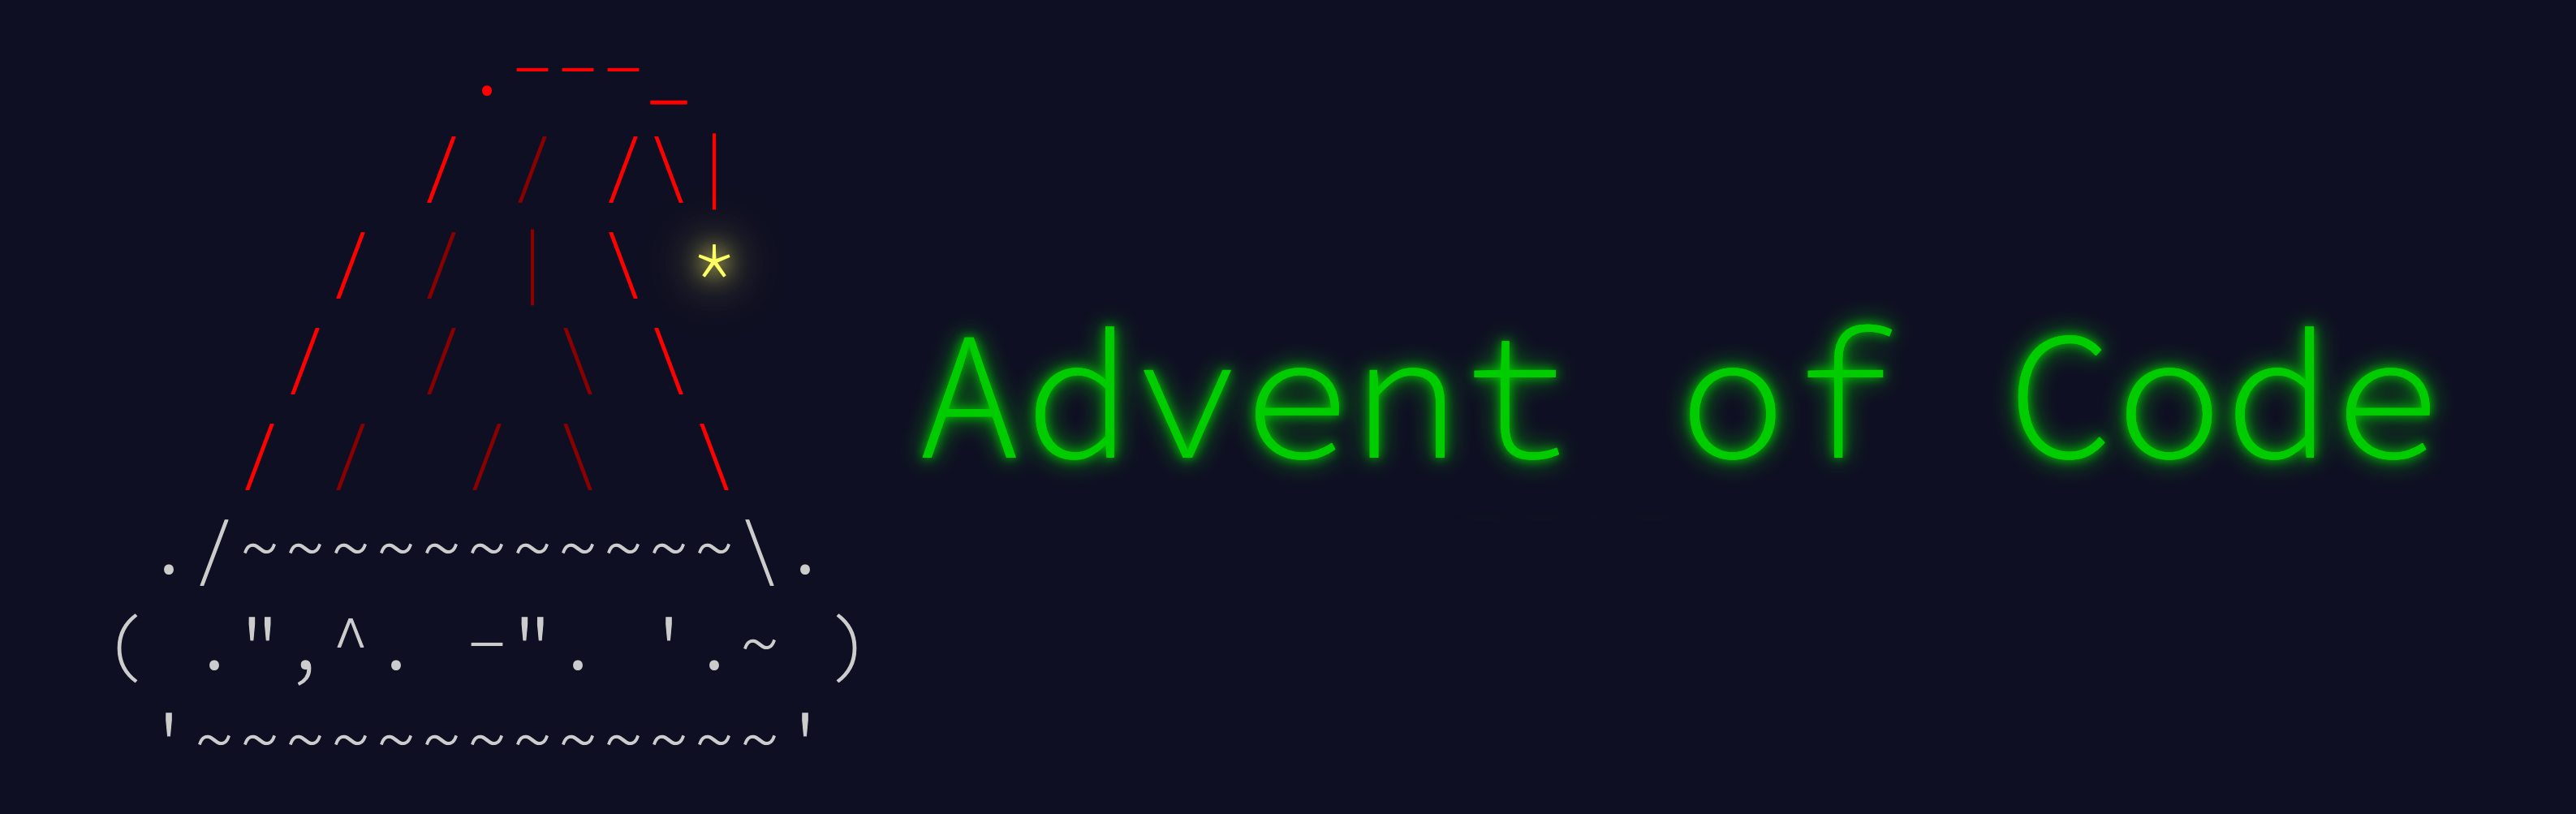 Advent of Code logo